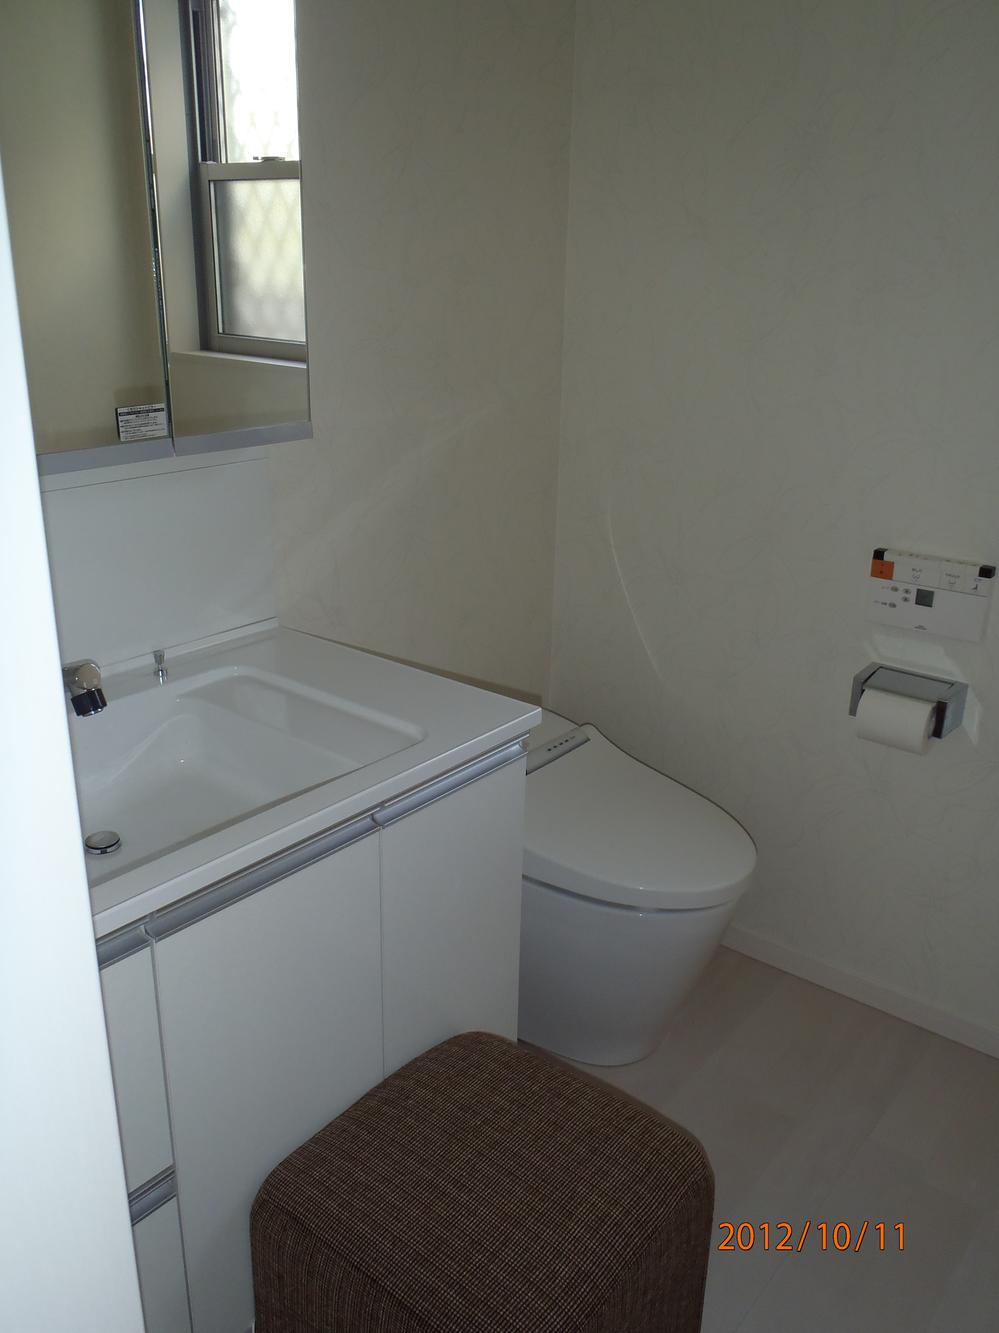 Bathroom. Room (same specifications) after renovation